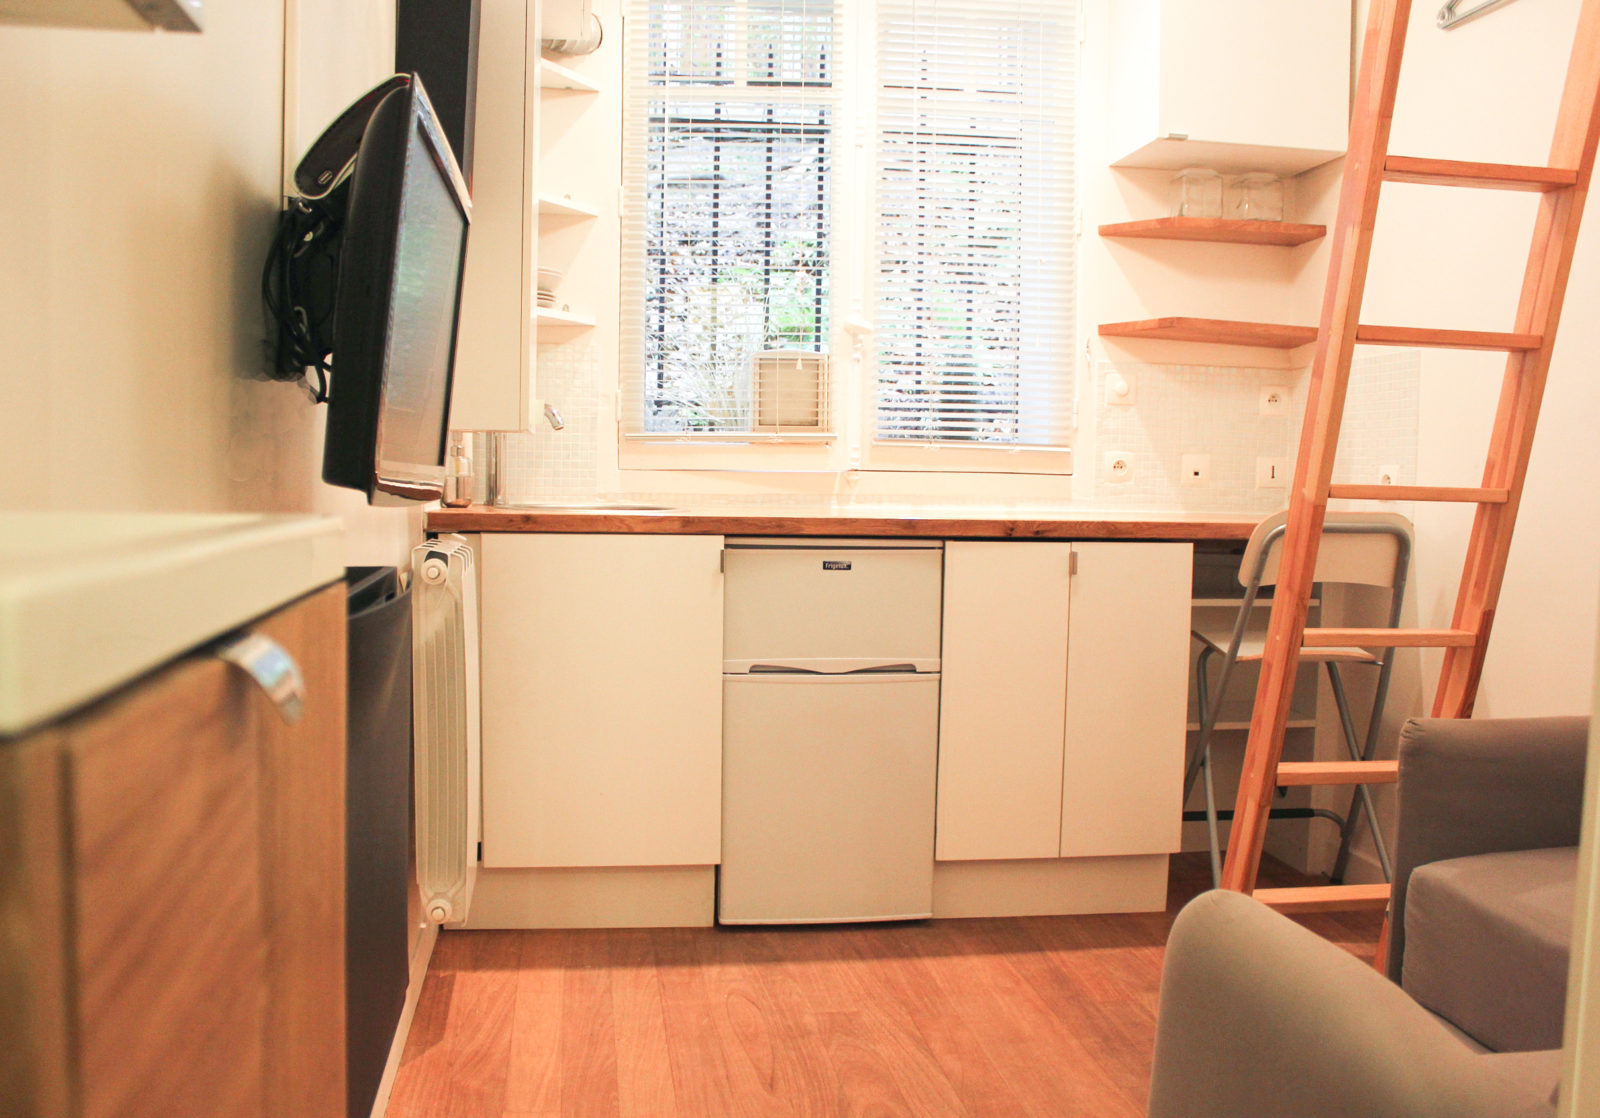 Blog Inside my Home - Comment rénover et aménager une chambre de service de 8 m² - How to renovate and optimize the space of a tiny studio flat